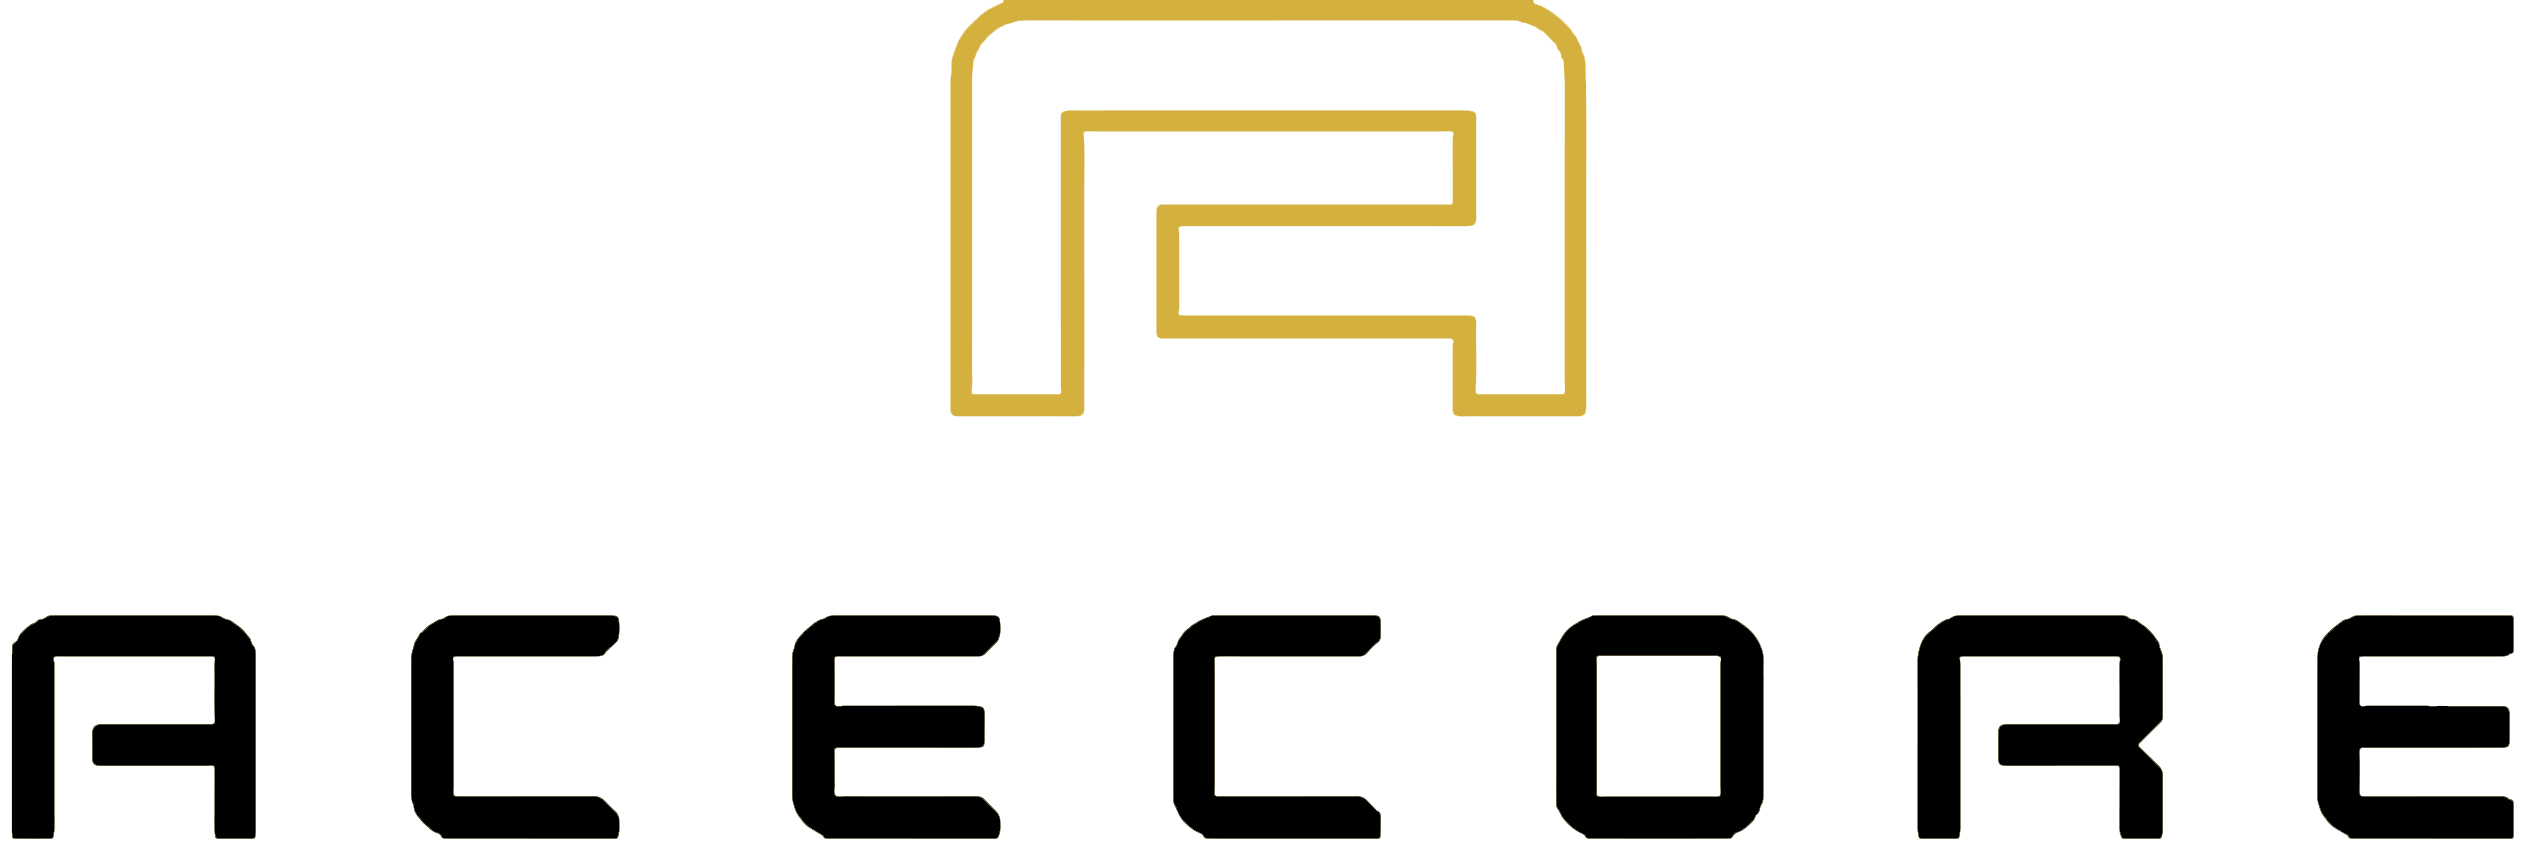 Acecore 2019 GOLD BLACK